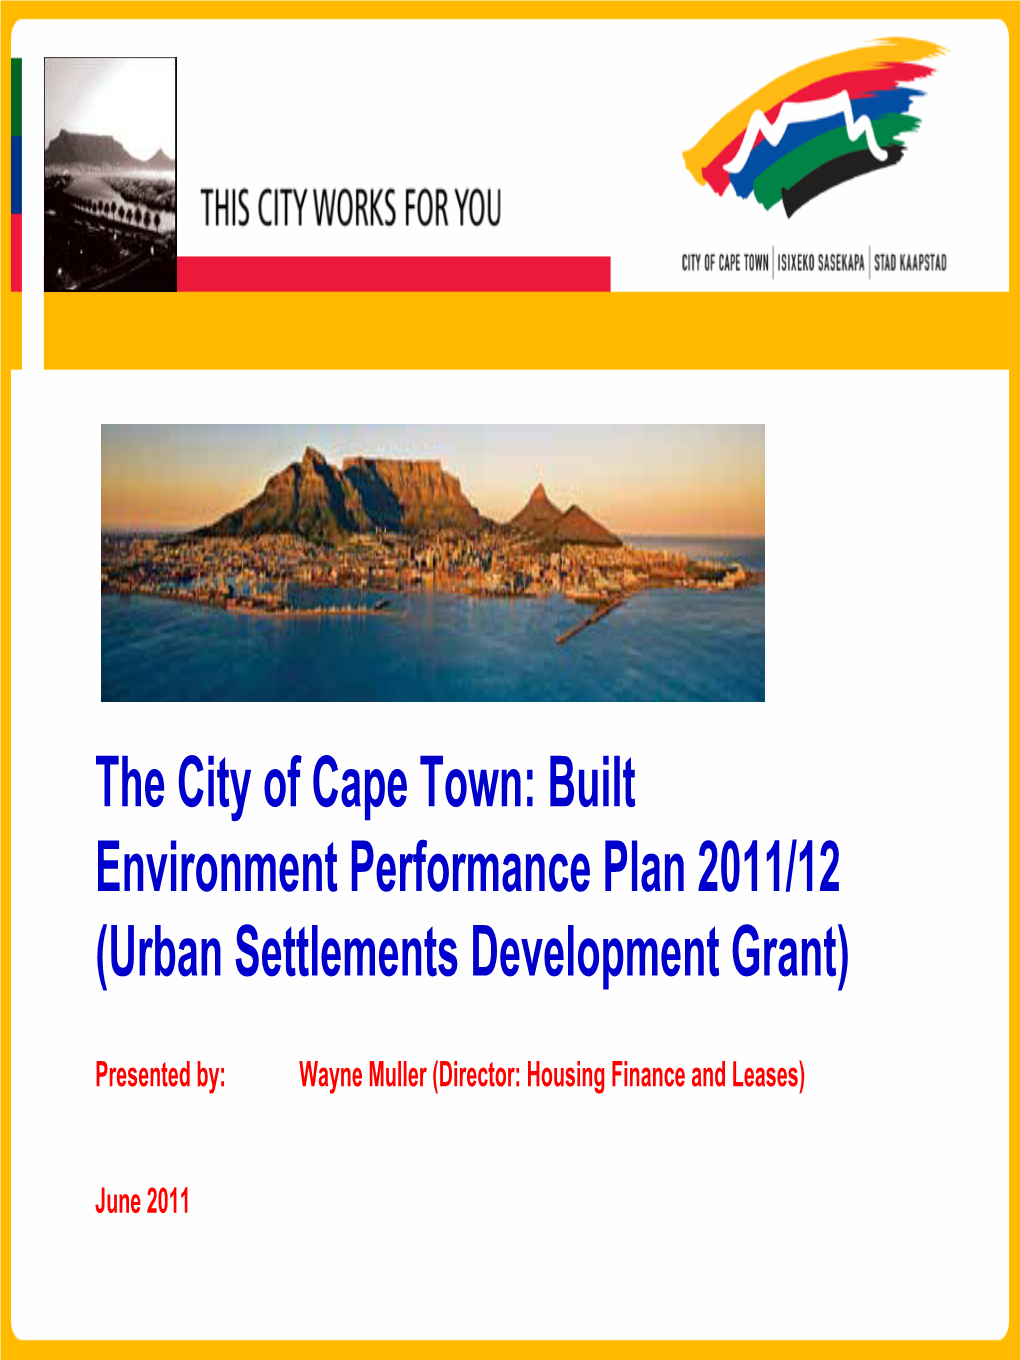 The City of Cape Town: Built Environment Performance Plan 2011/12 (Urban Settlements Development Grant)